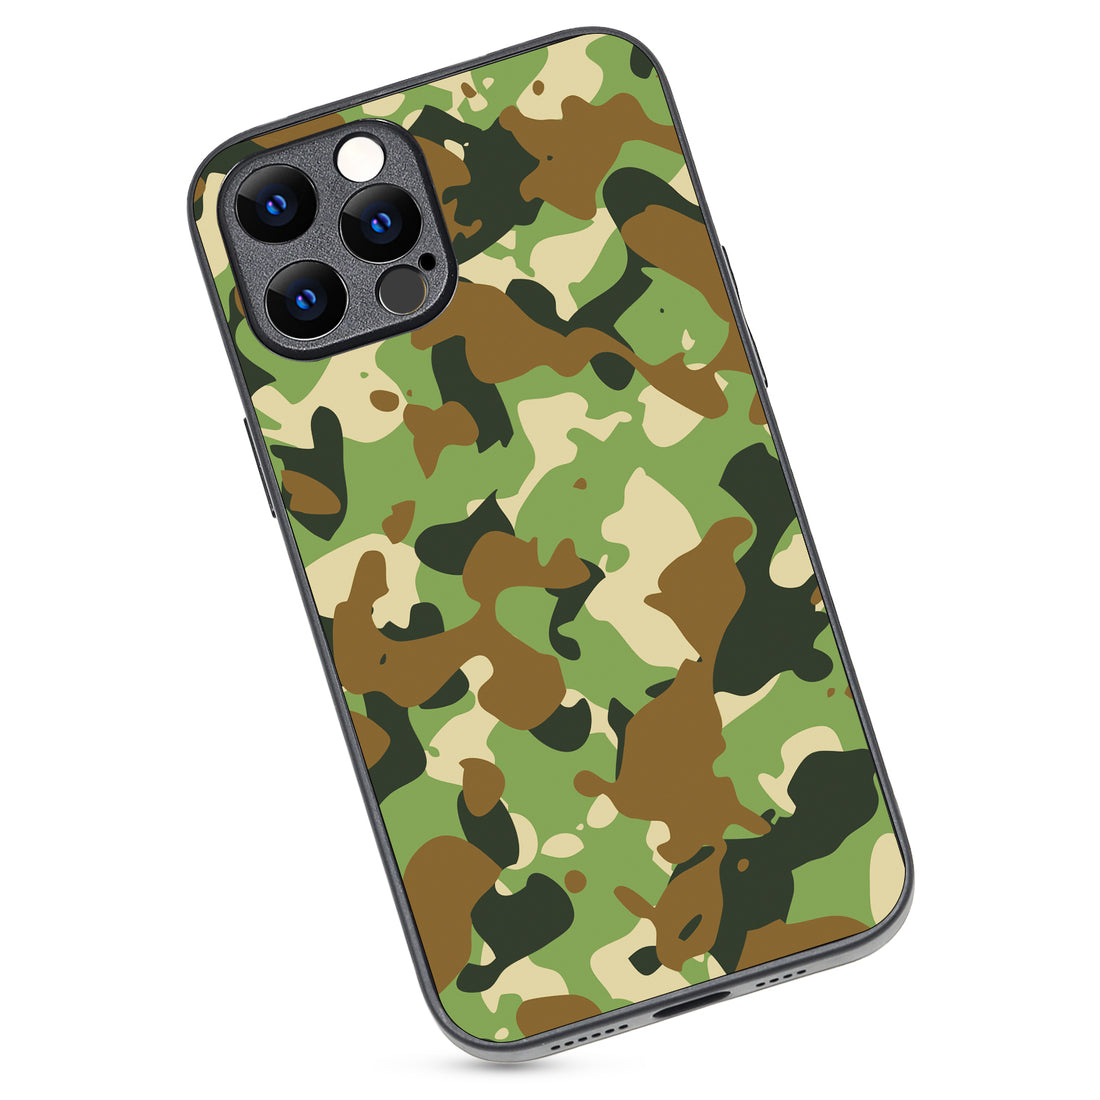 Camouflage Design iPhone 12 Pro Max Case